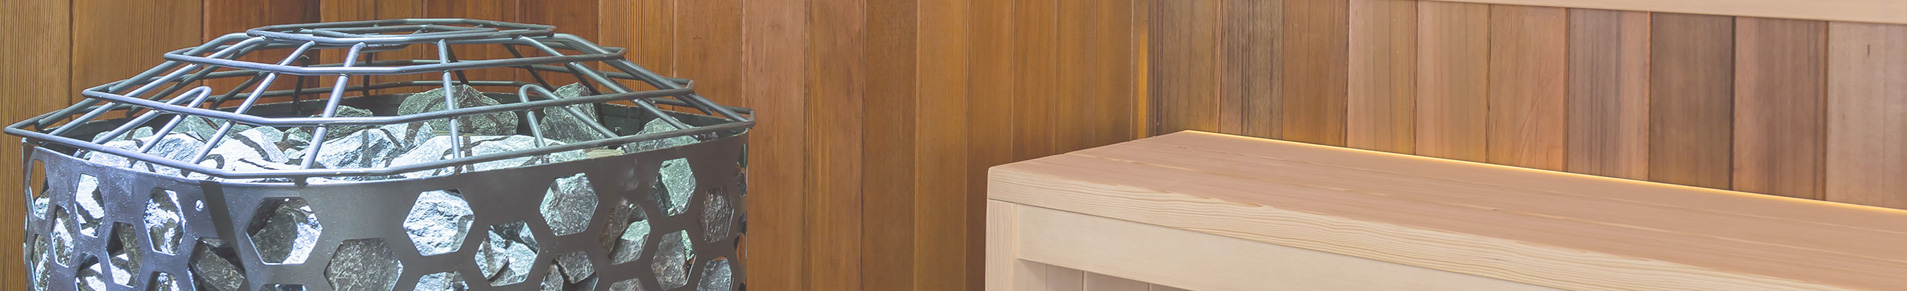 Designing & Building Your Sauna